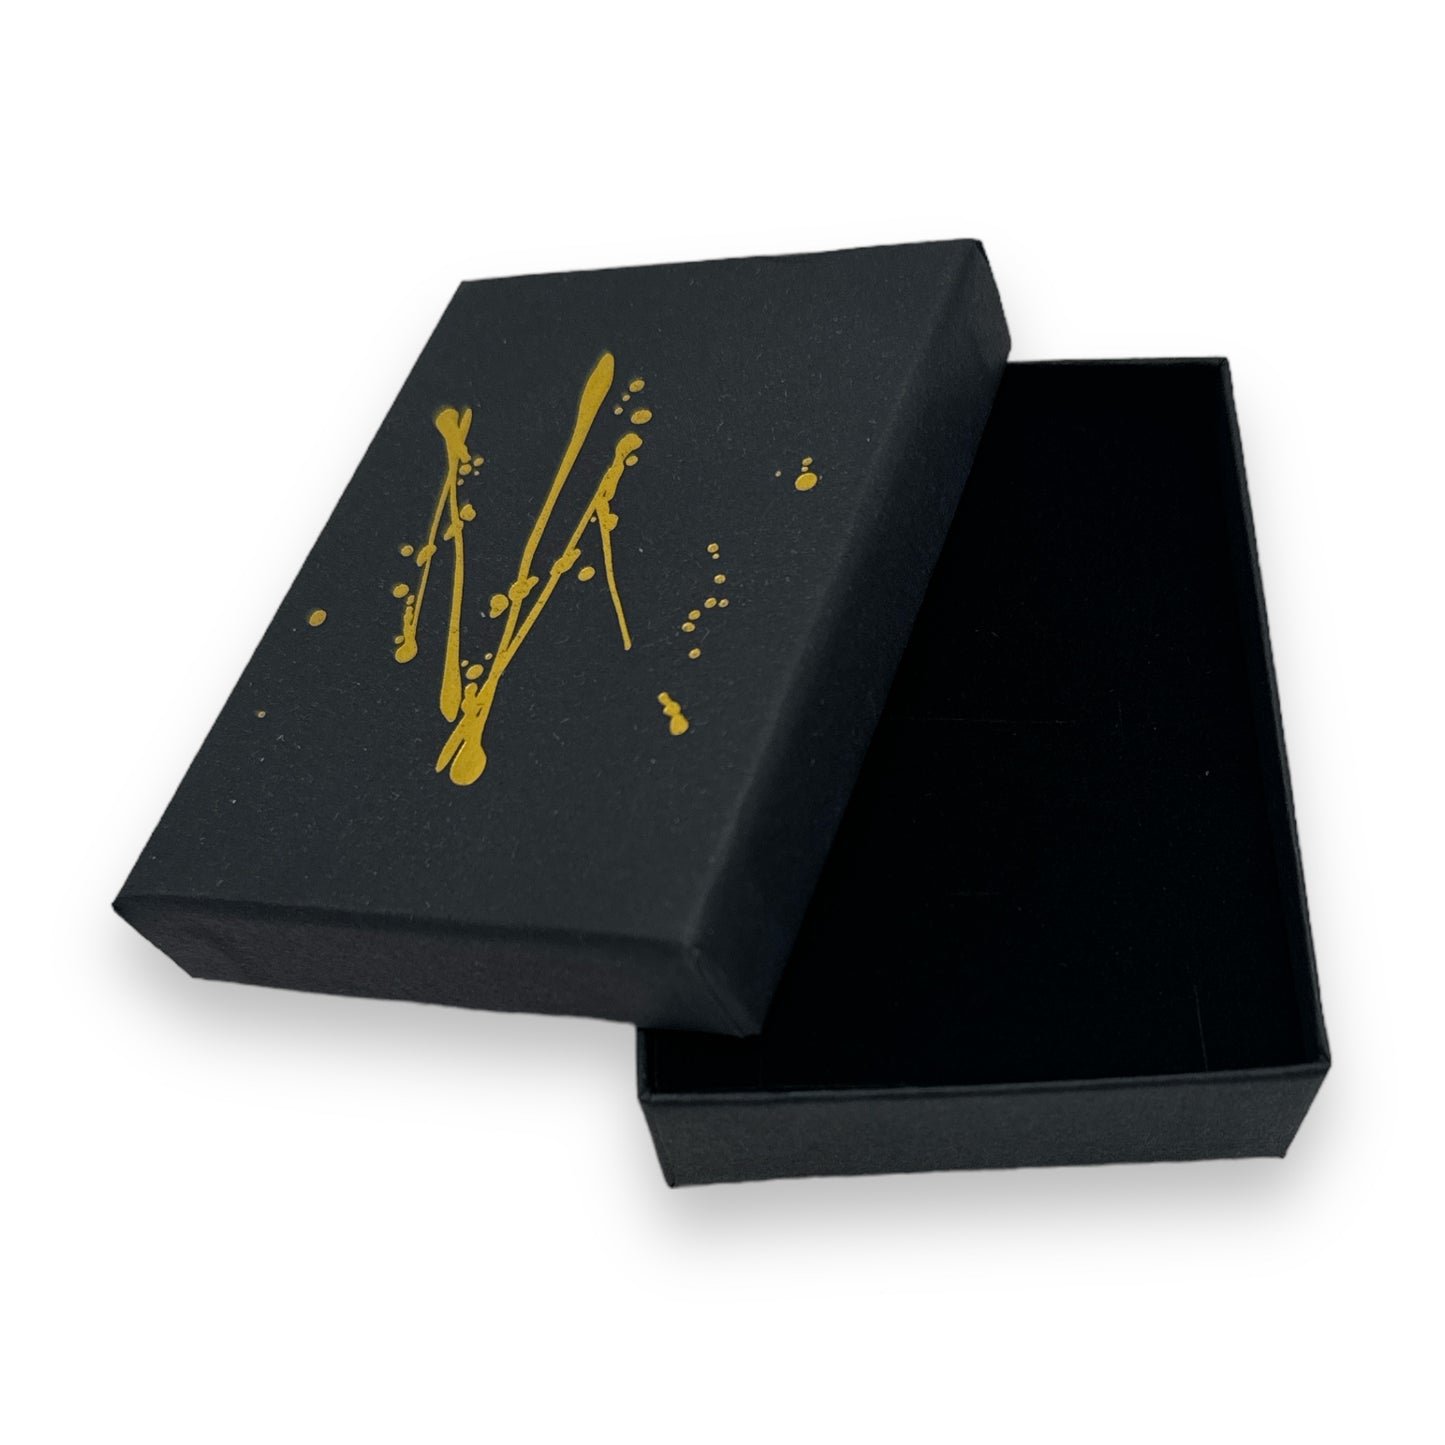 Kinky Pleasure - T070 - Elegant Black Jewelry Box With Gold Splash - 9,2 x 7 x 2.7 cm